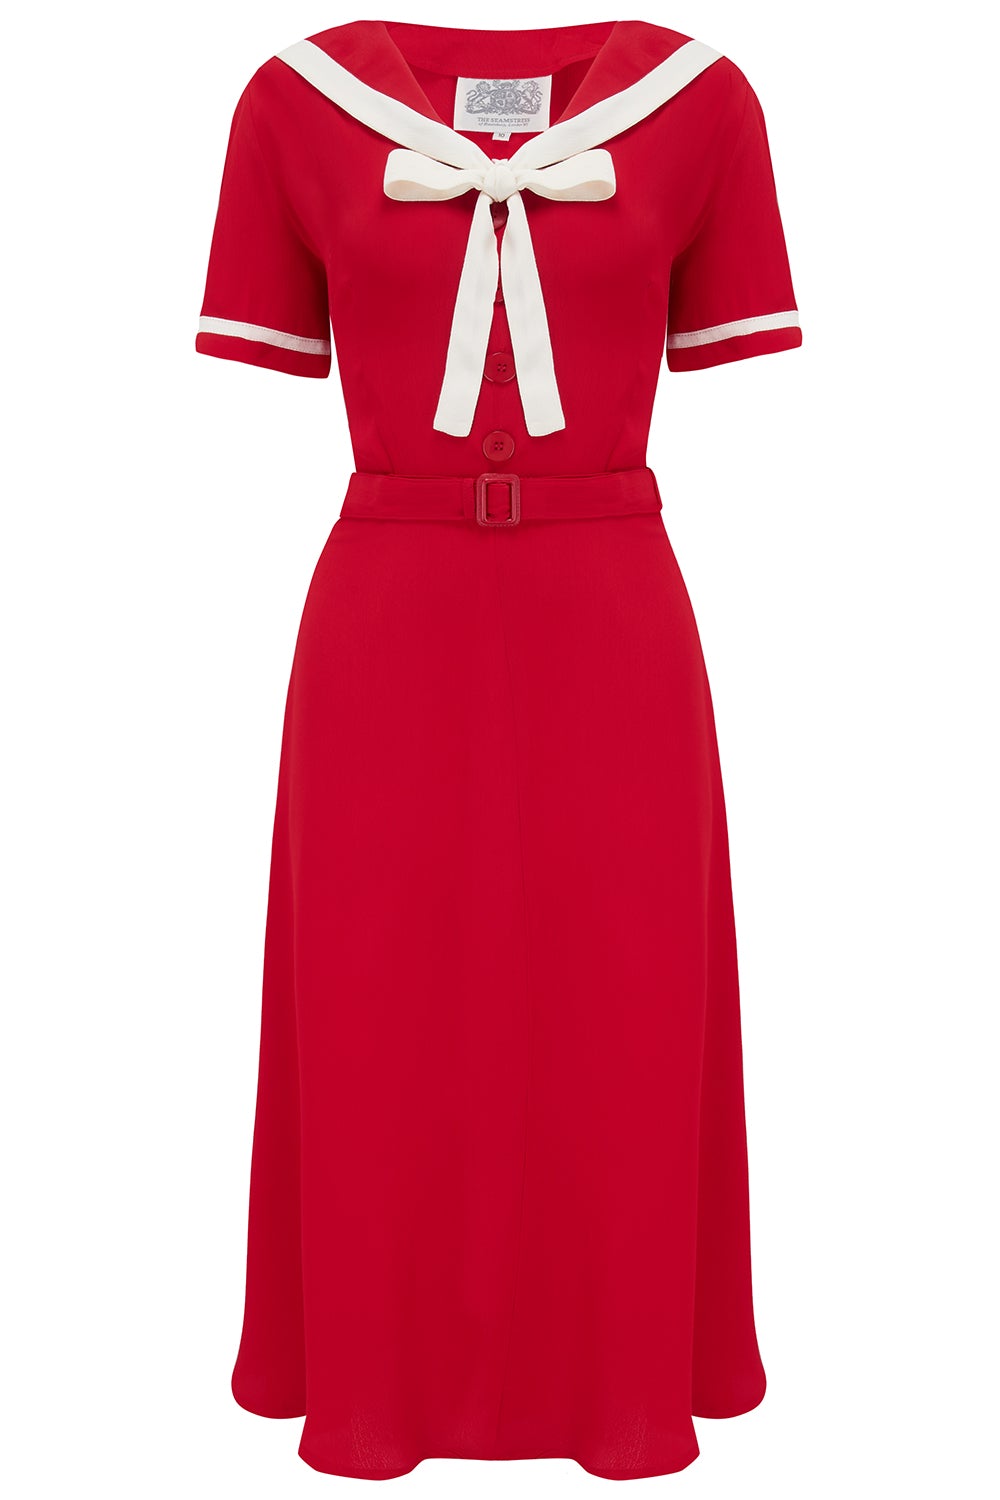 Vintage Sailor Clothes, Nautical Theme Clothing 1920s-1950s Patti 1940s Nautical Sailor Dress in Red Authentic true vintage style £79.01 AT vintagedancer.com